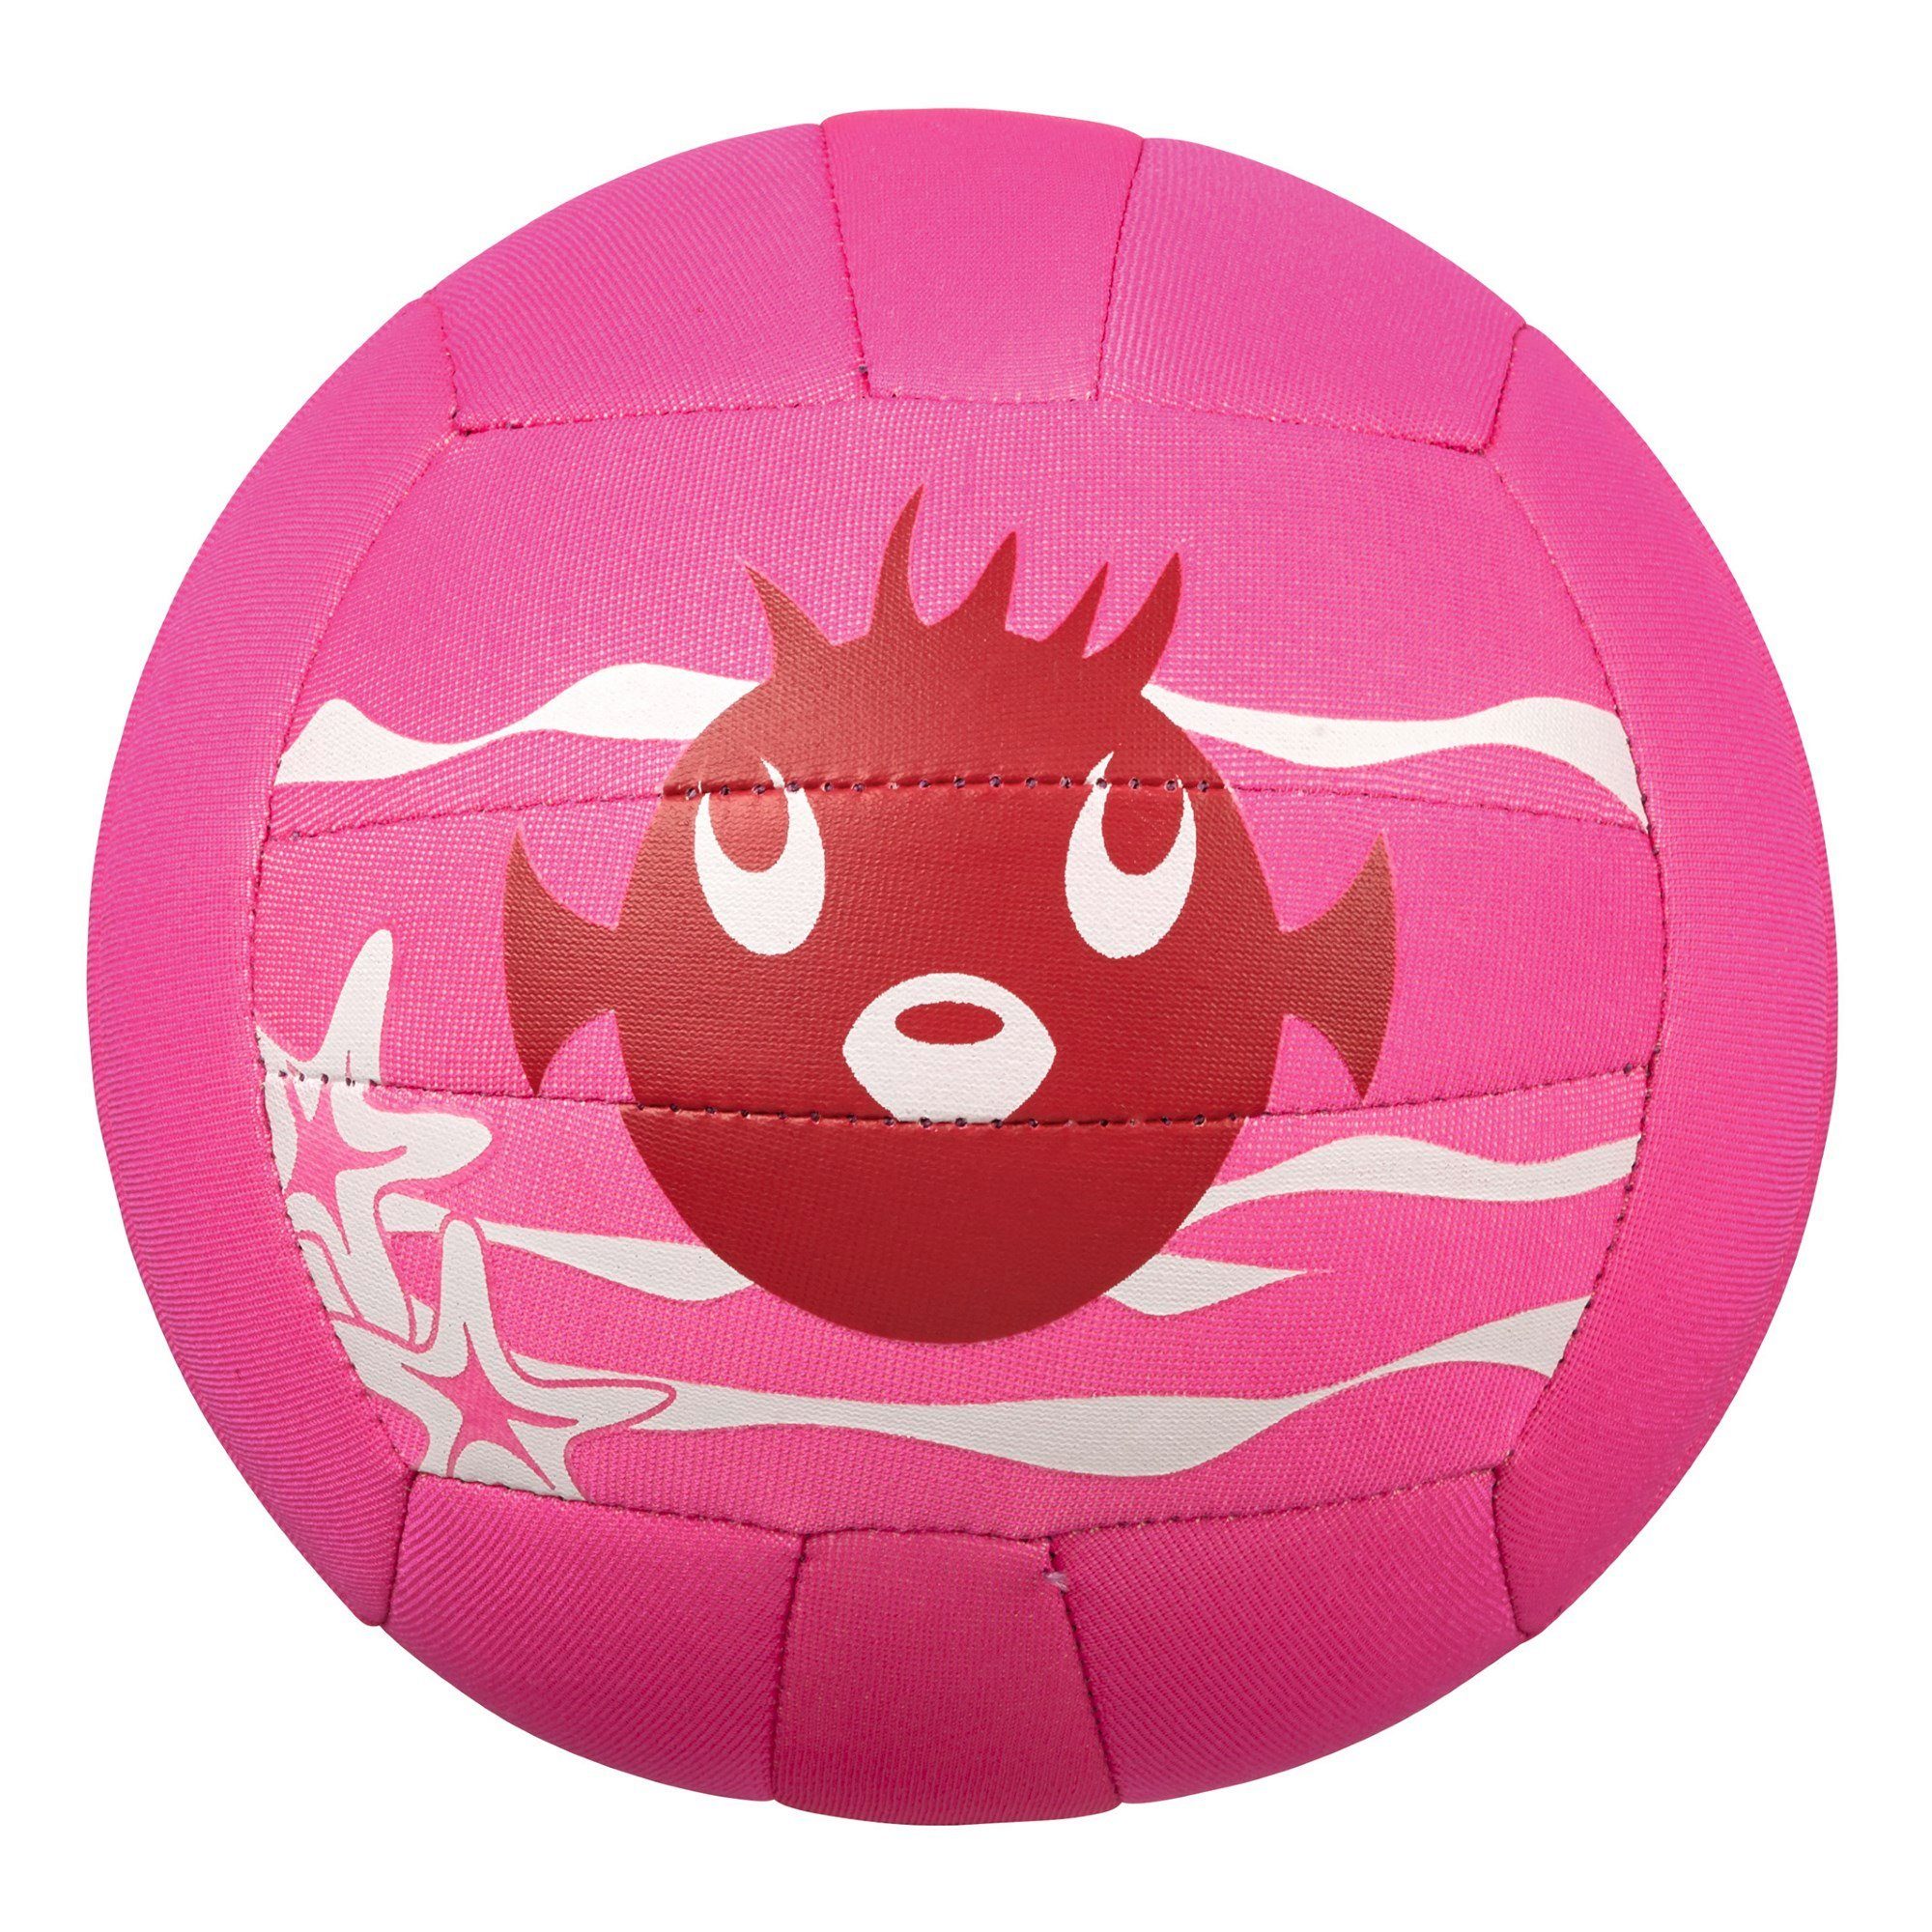 Beco Beermann Spielball pink SEALIFE 15cm BECO Ball Beach Neopren